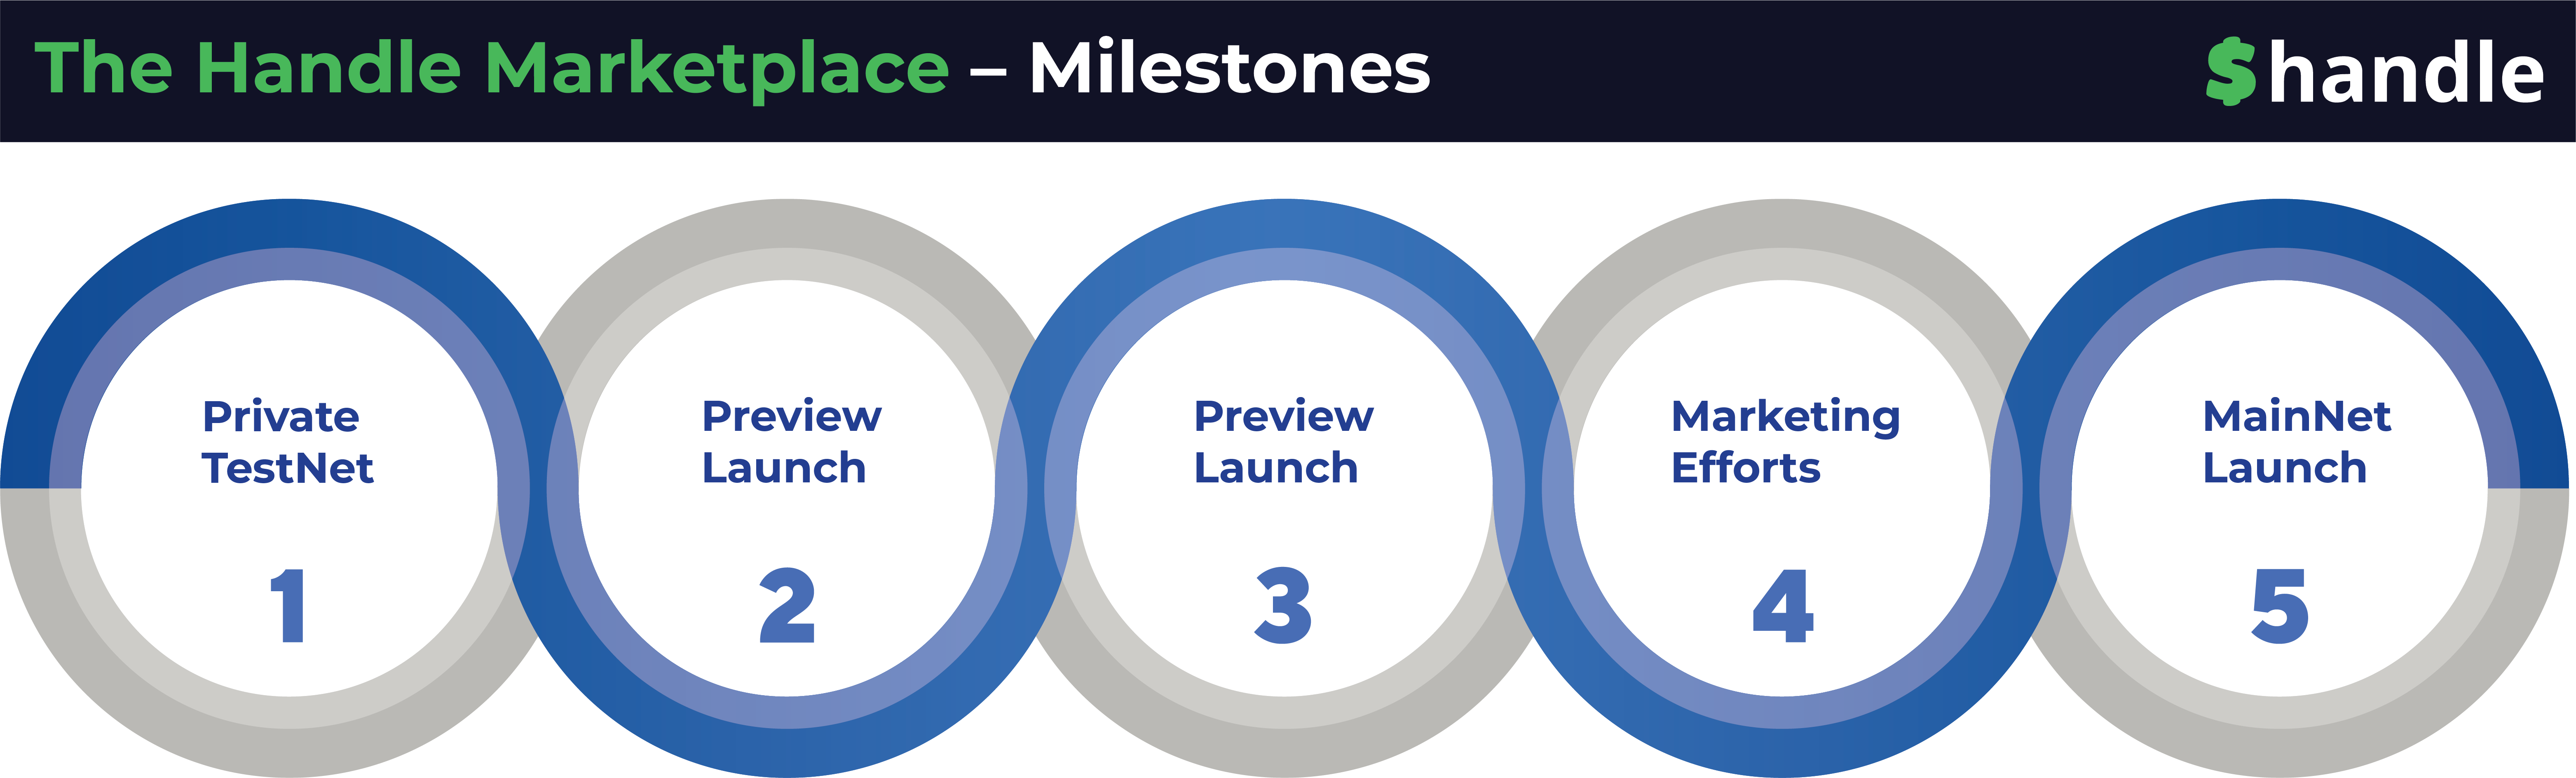 The Handle Marketplace - Milestones